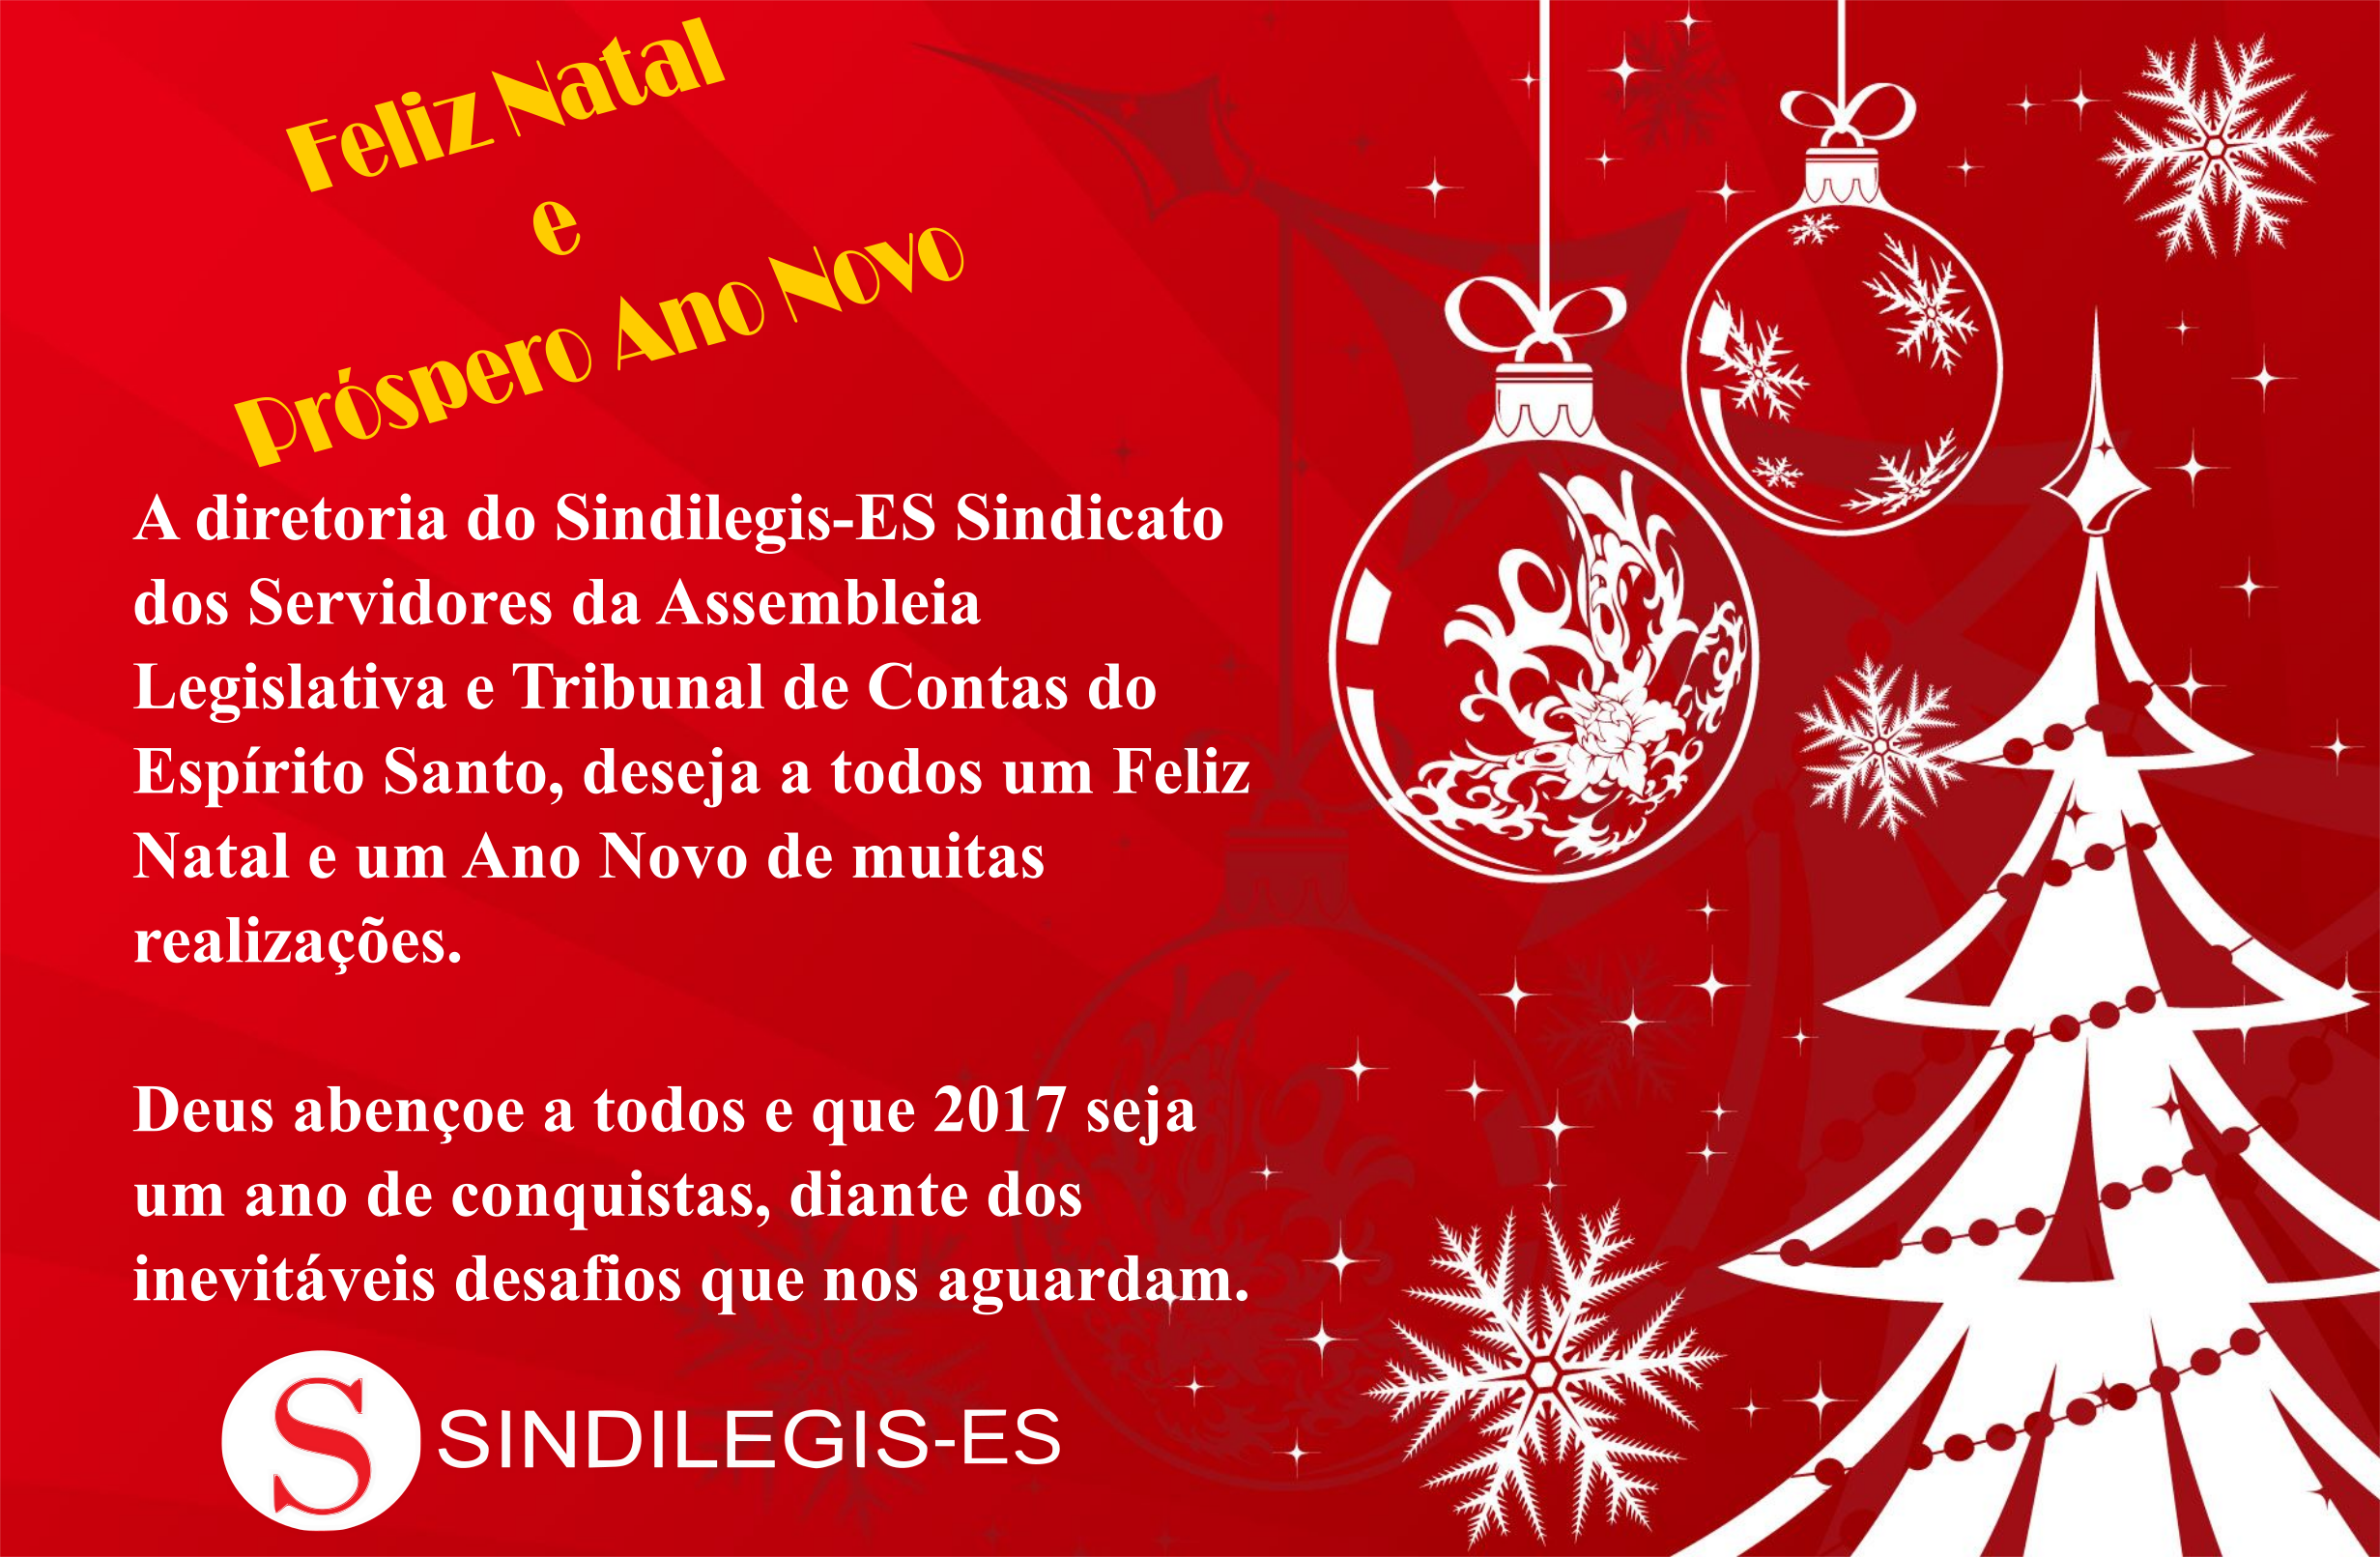 Feliz Natal e próspero Ano Novo - Sindalesp